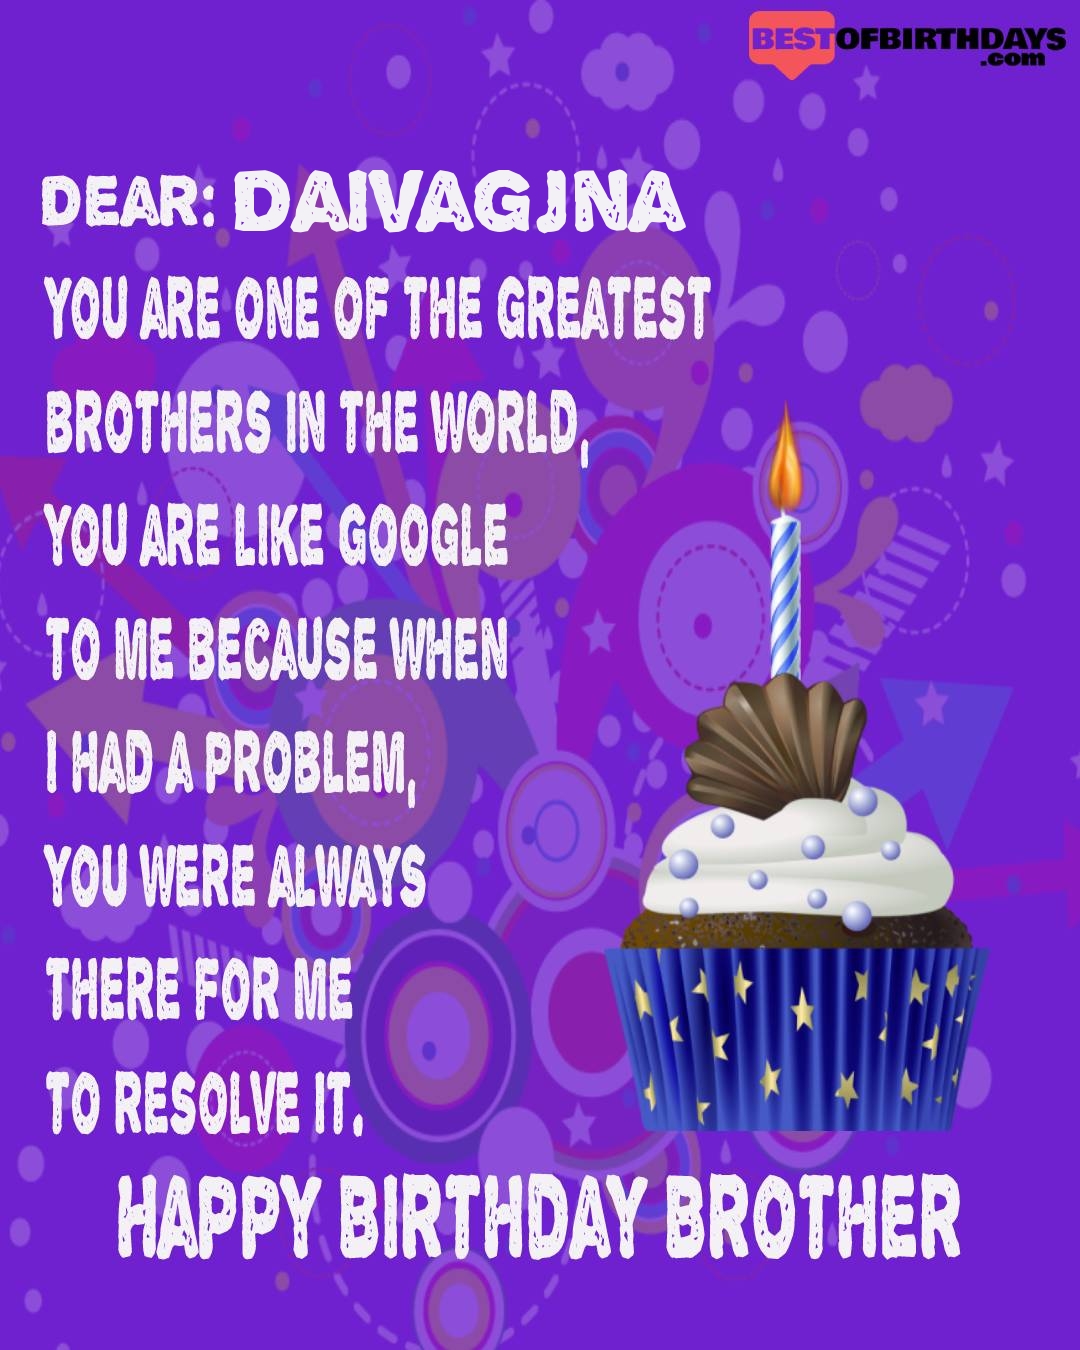 Happy birthday daivagjna bhai brother bro